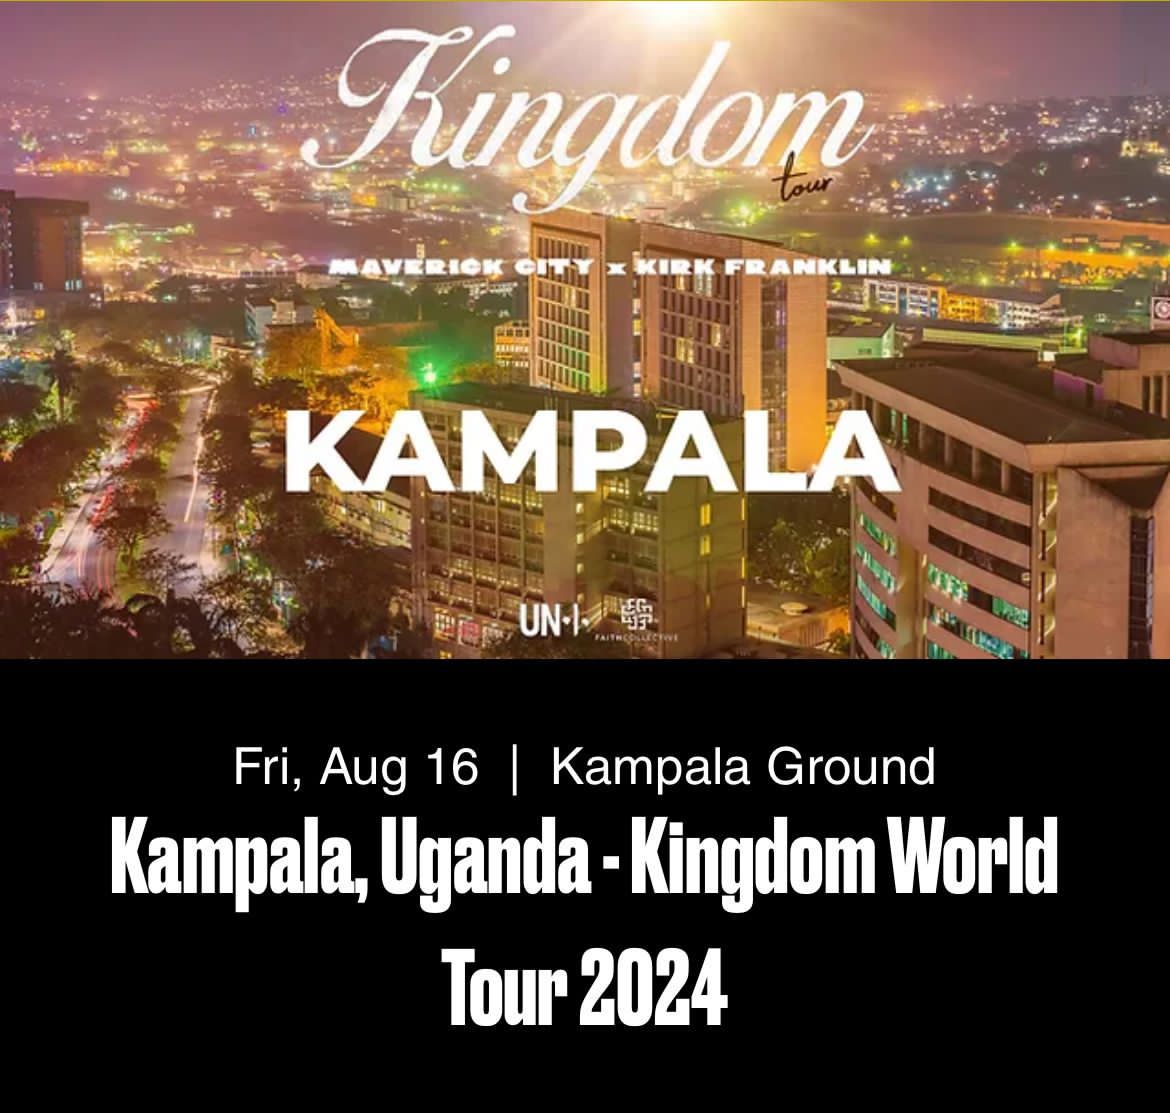 Uganda are you ready? Maverick City | Kirk Franklin